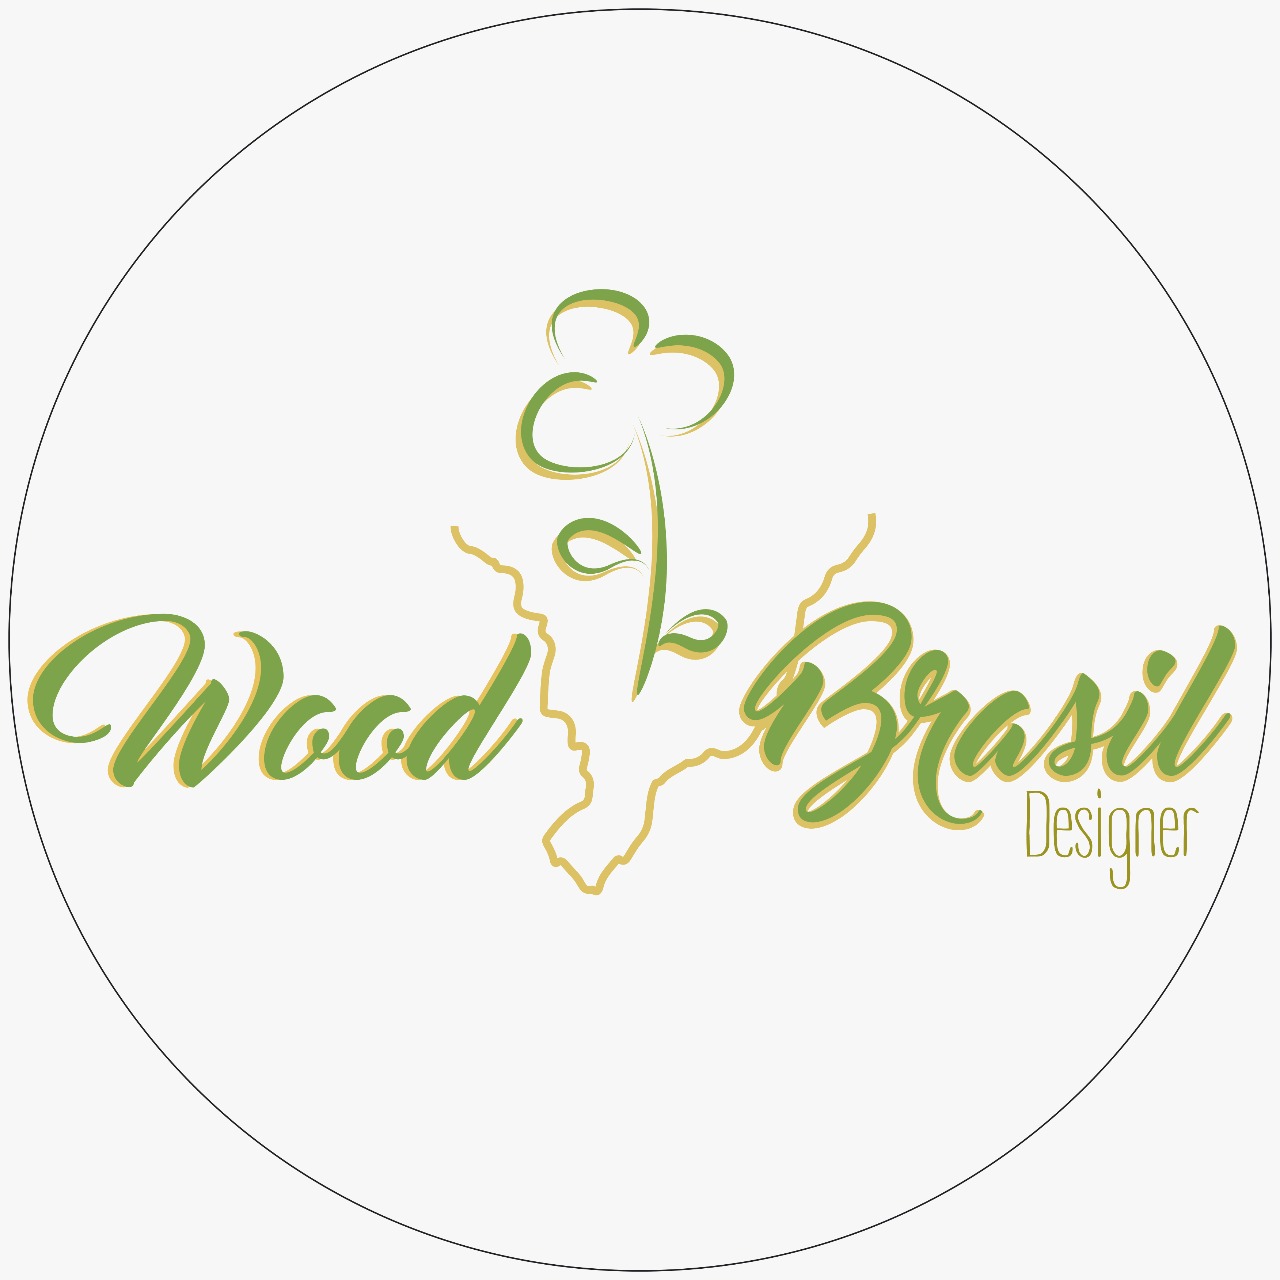 Wood Brasil Designer